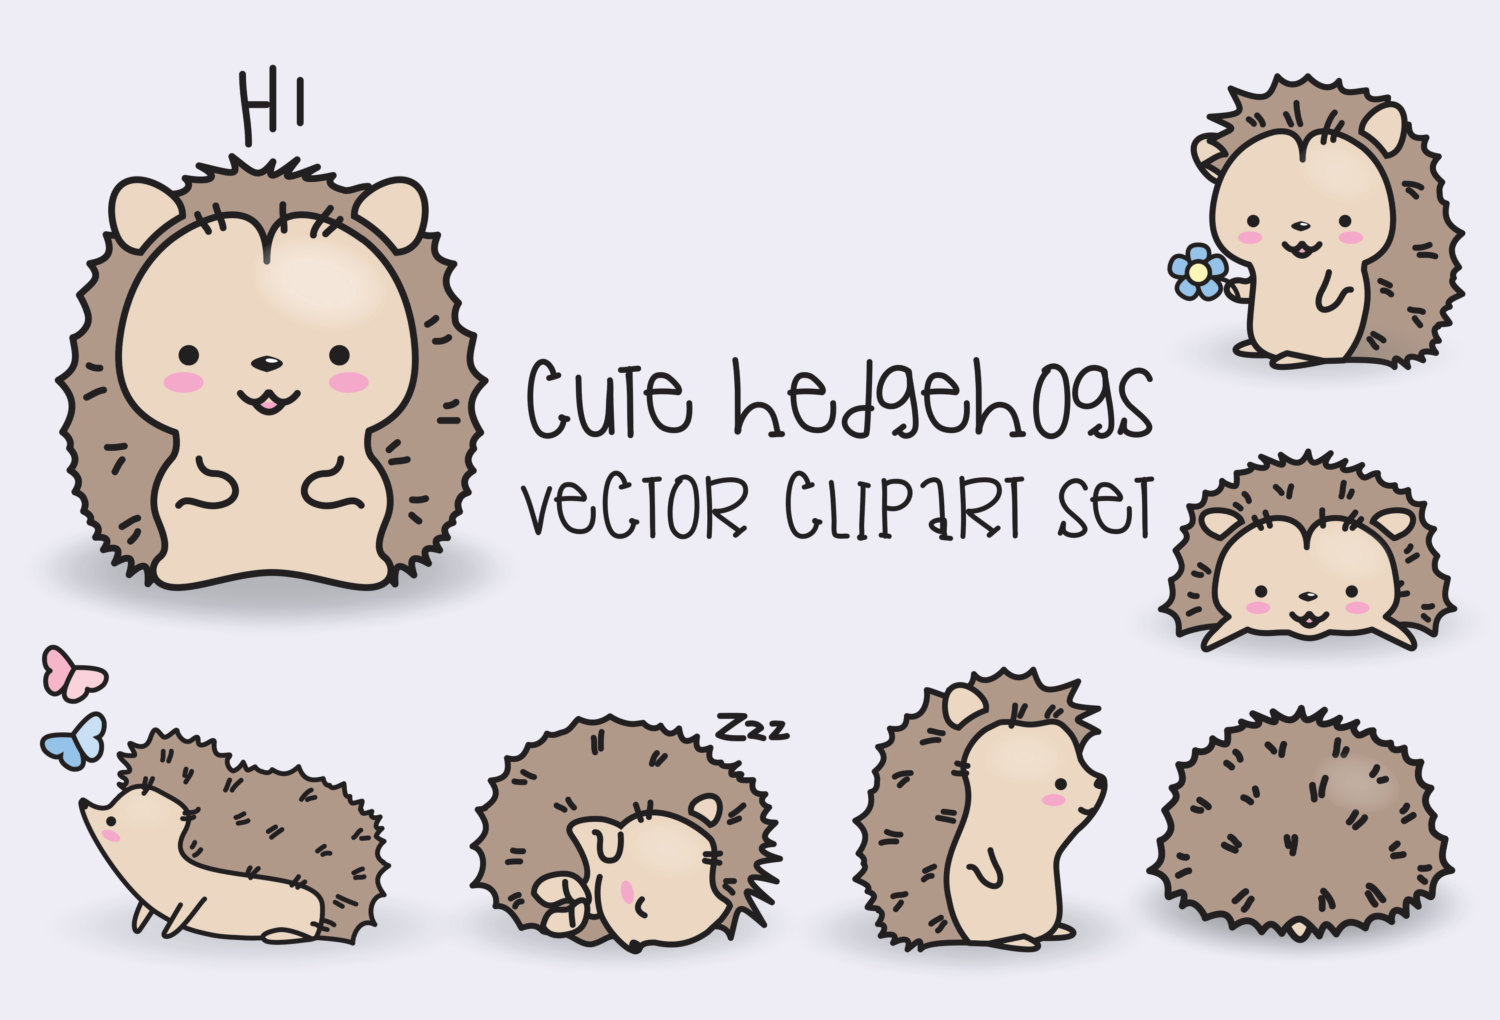 Free Hedgehog Outline Cliparts, Download Free Hedgehog Outline Cliparts